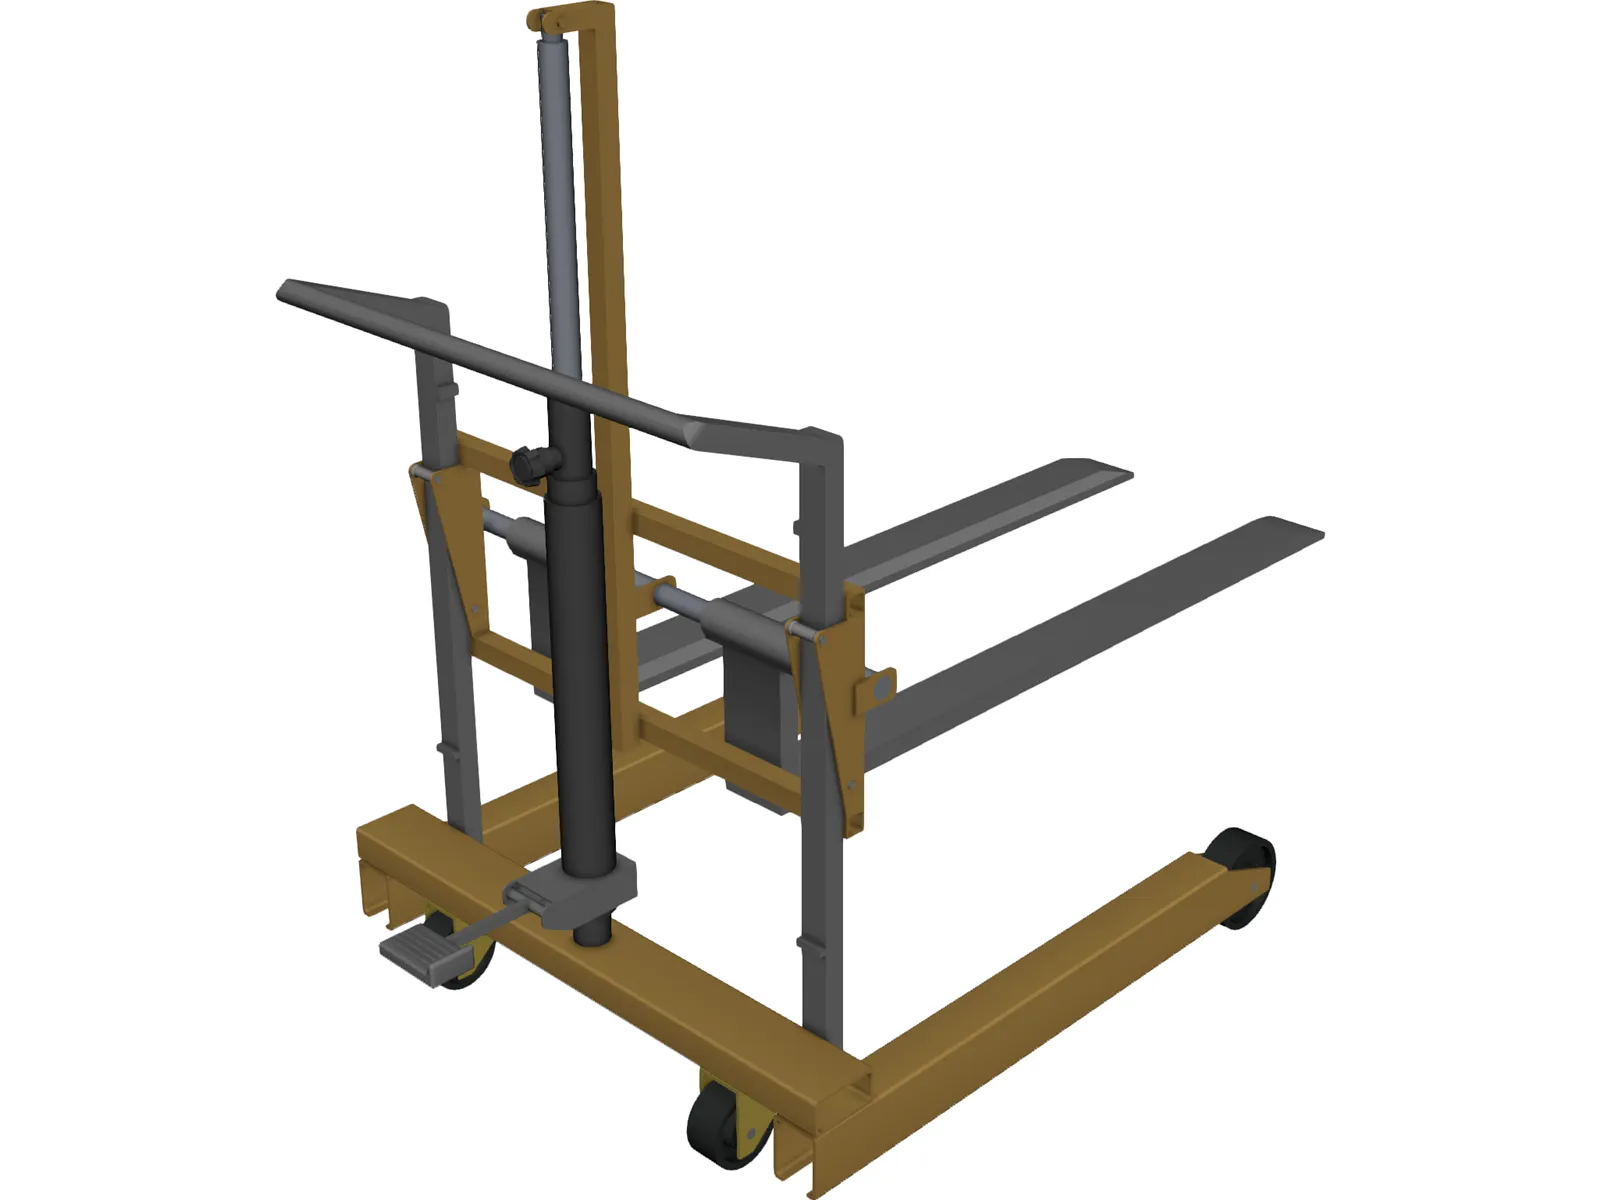 Hand Forklift 3D Model